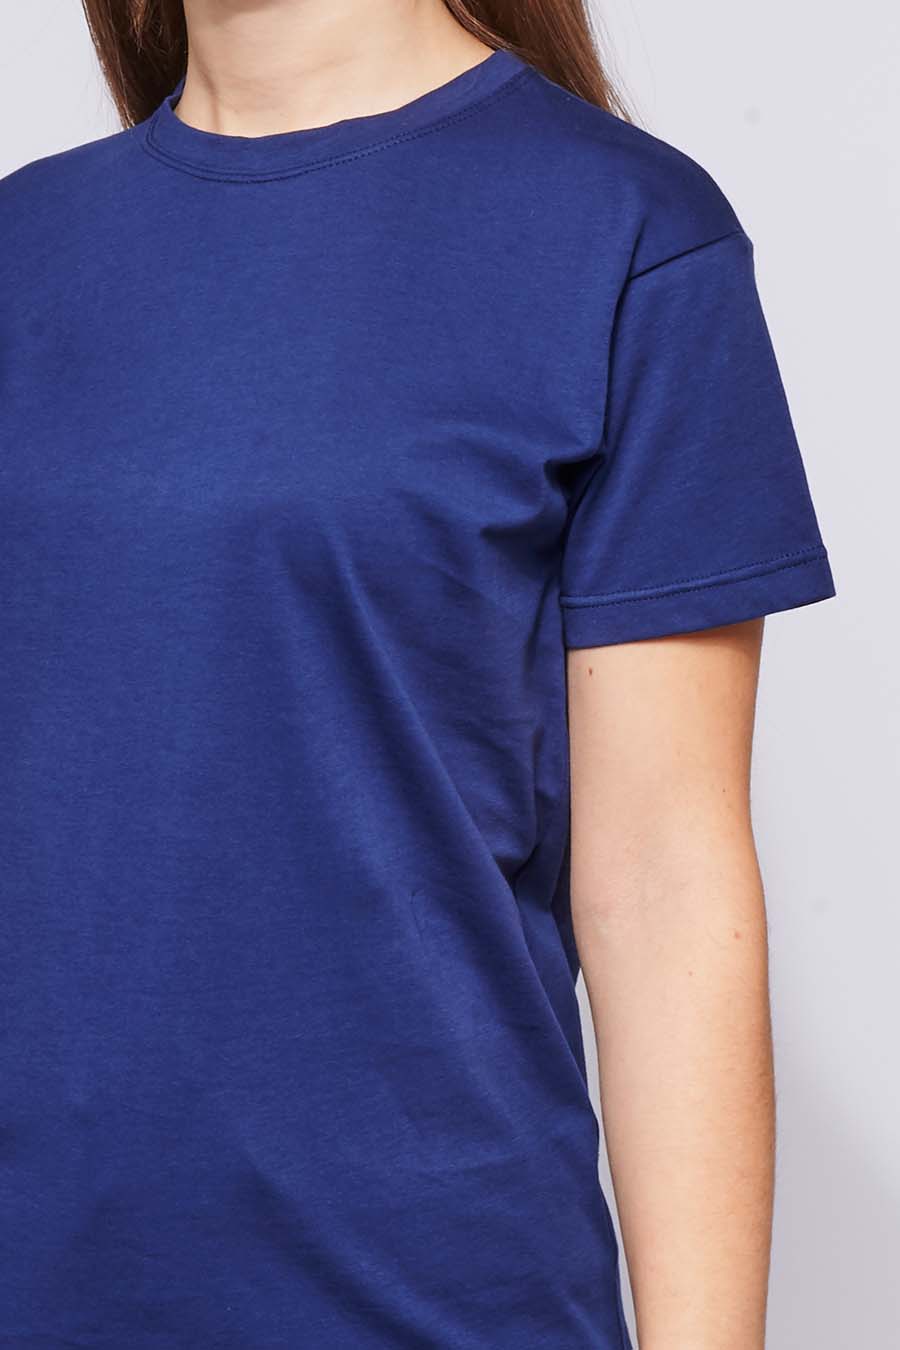 zoom tee-shirt Femme made in France en coton bio BRIGITTE marine - FIL ROUGE